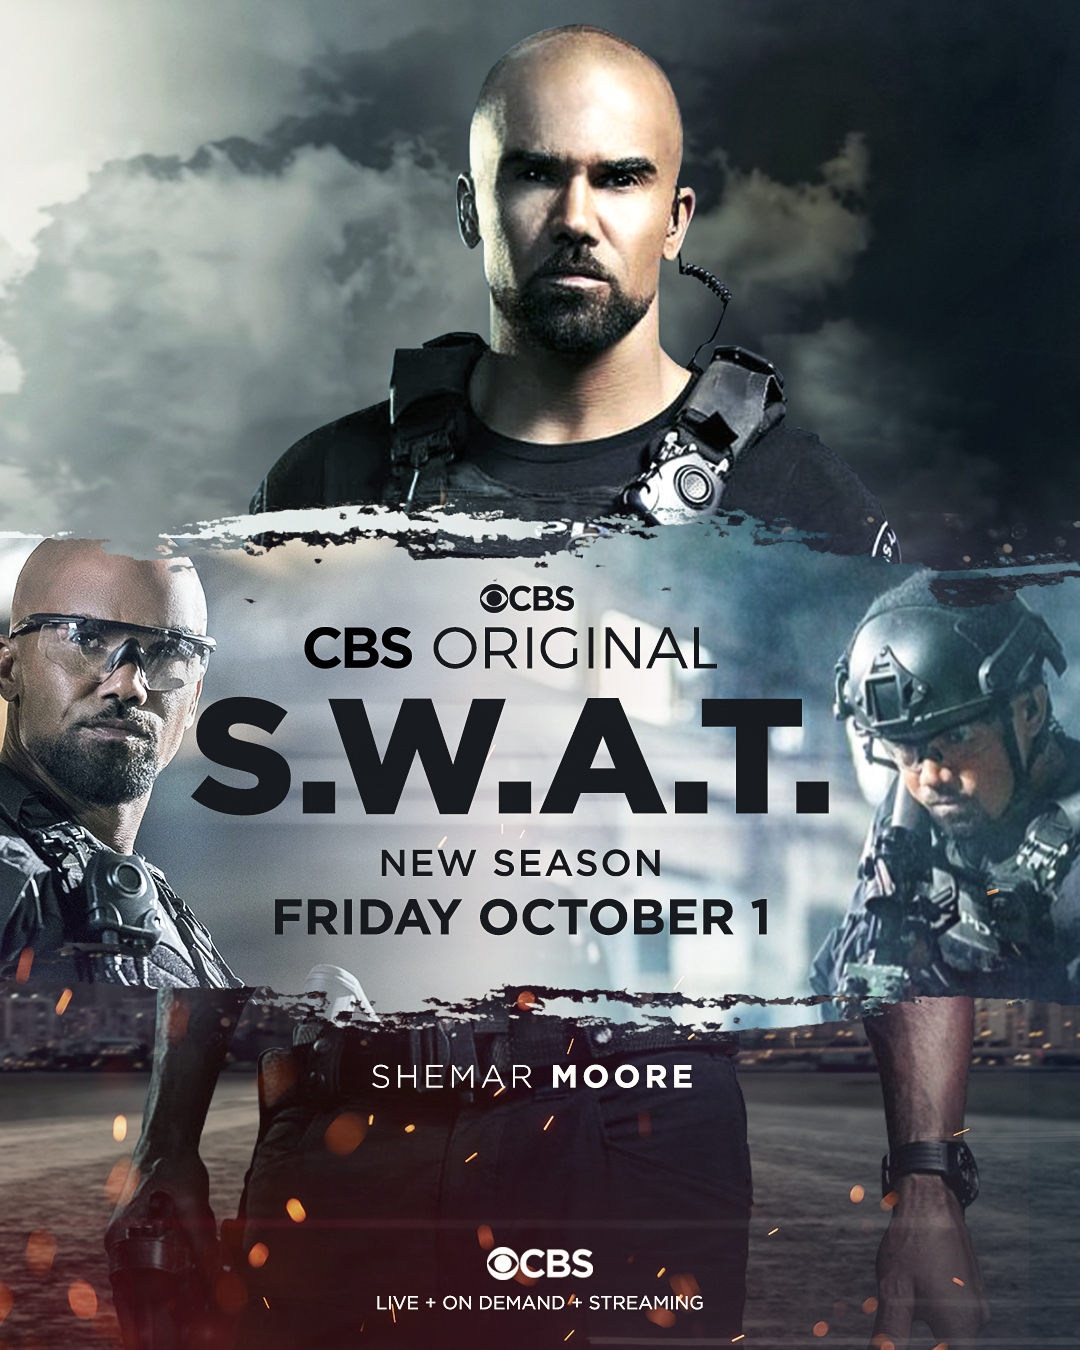 S.W.A.T cbs season 5 character poster by rahalarts on DeviantArt